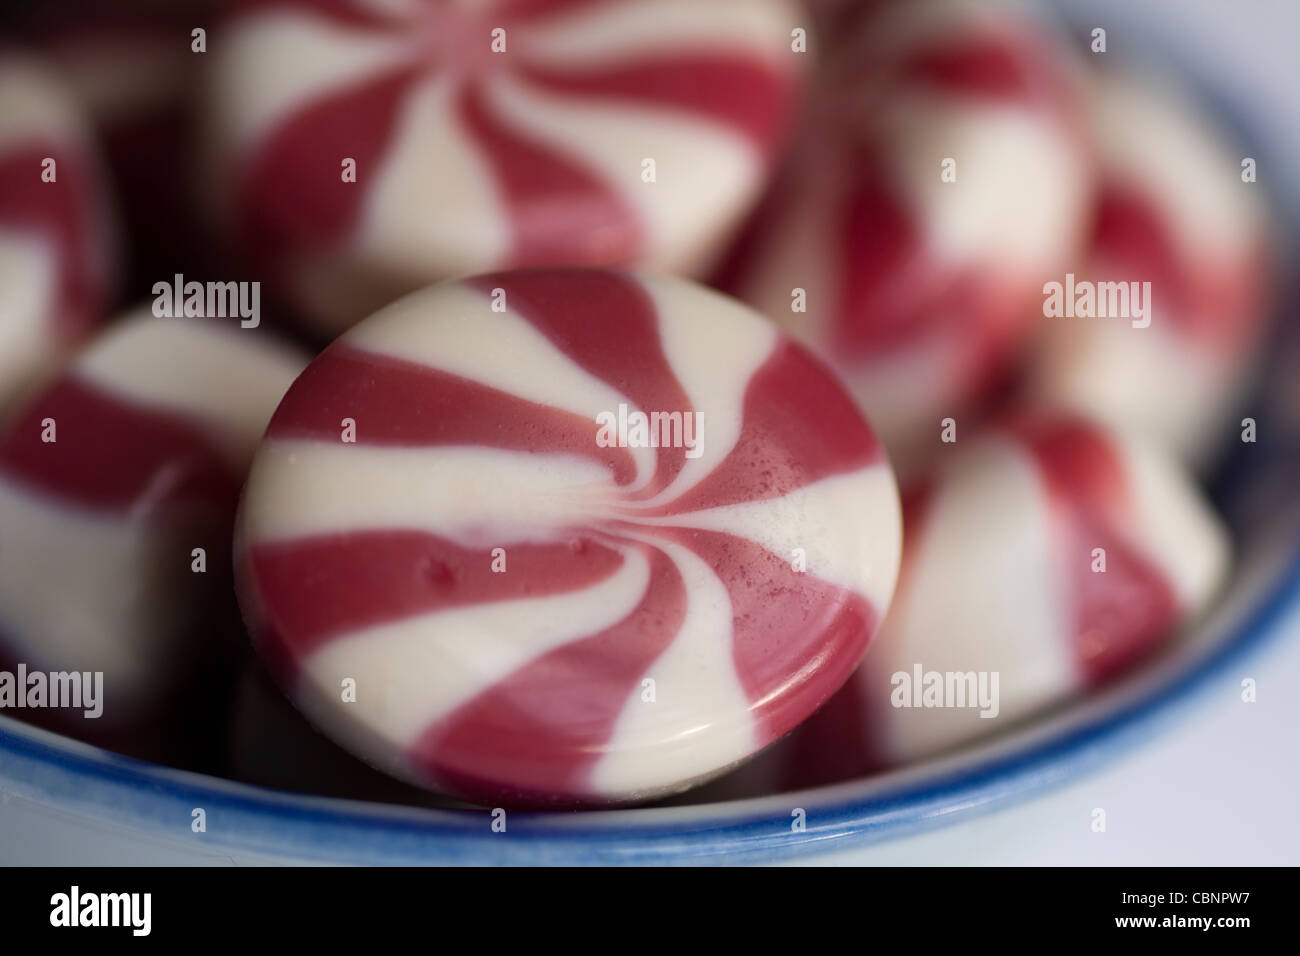 Erdbeeren und Sahne Bonbons Stockfotografie - Alamy